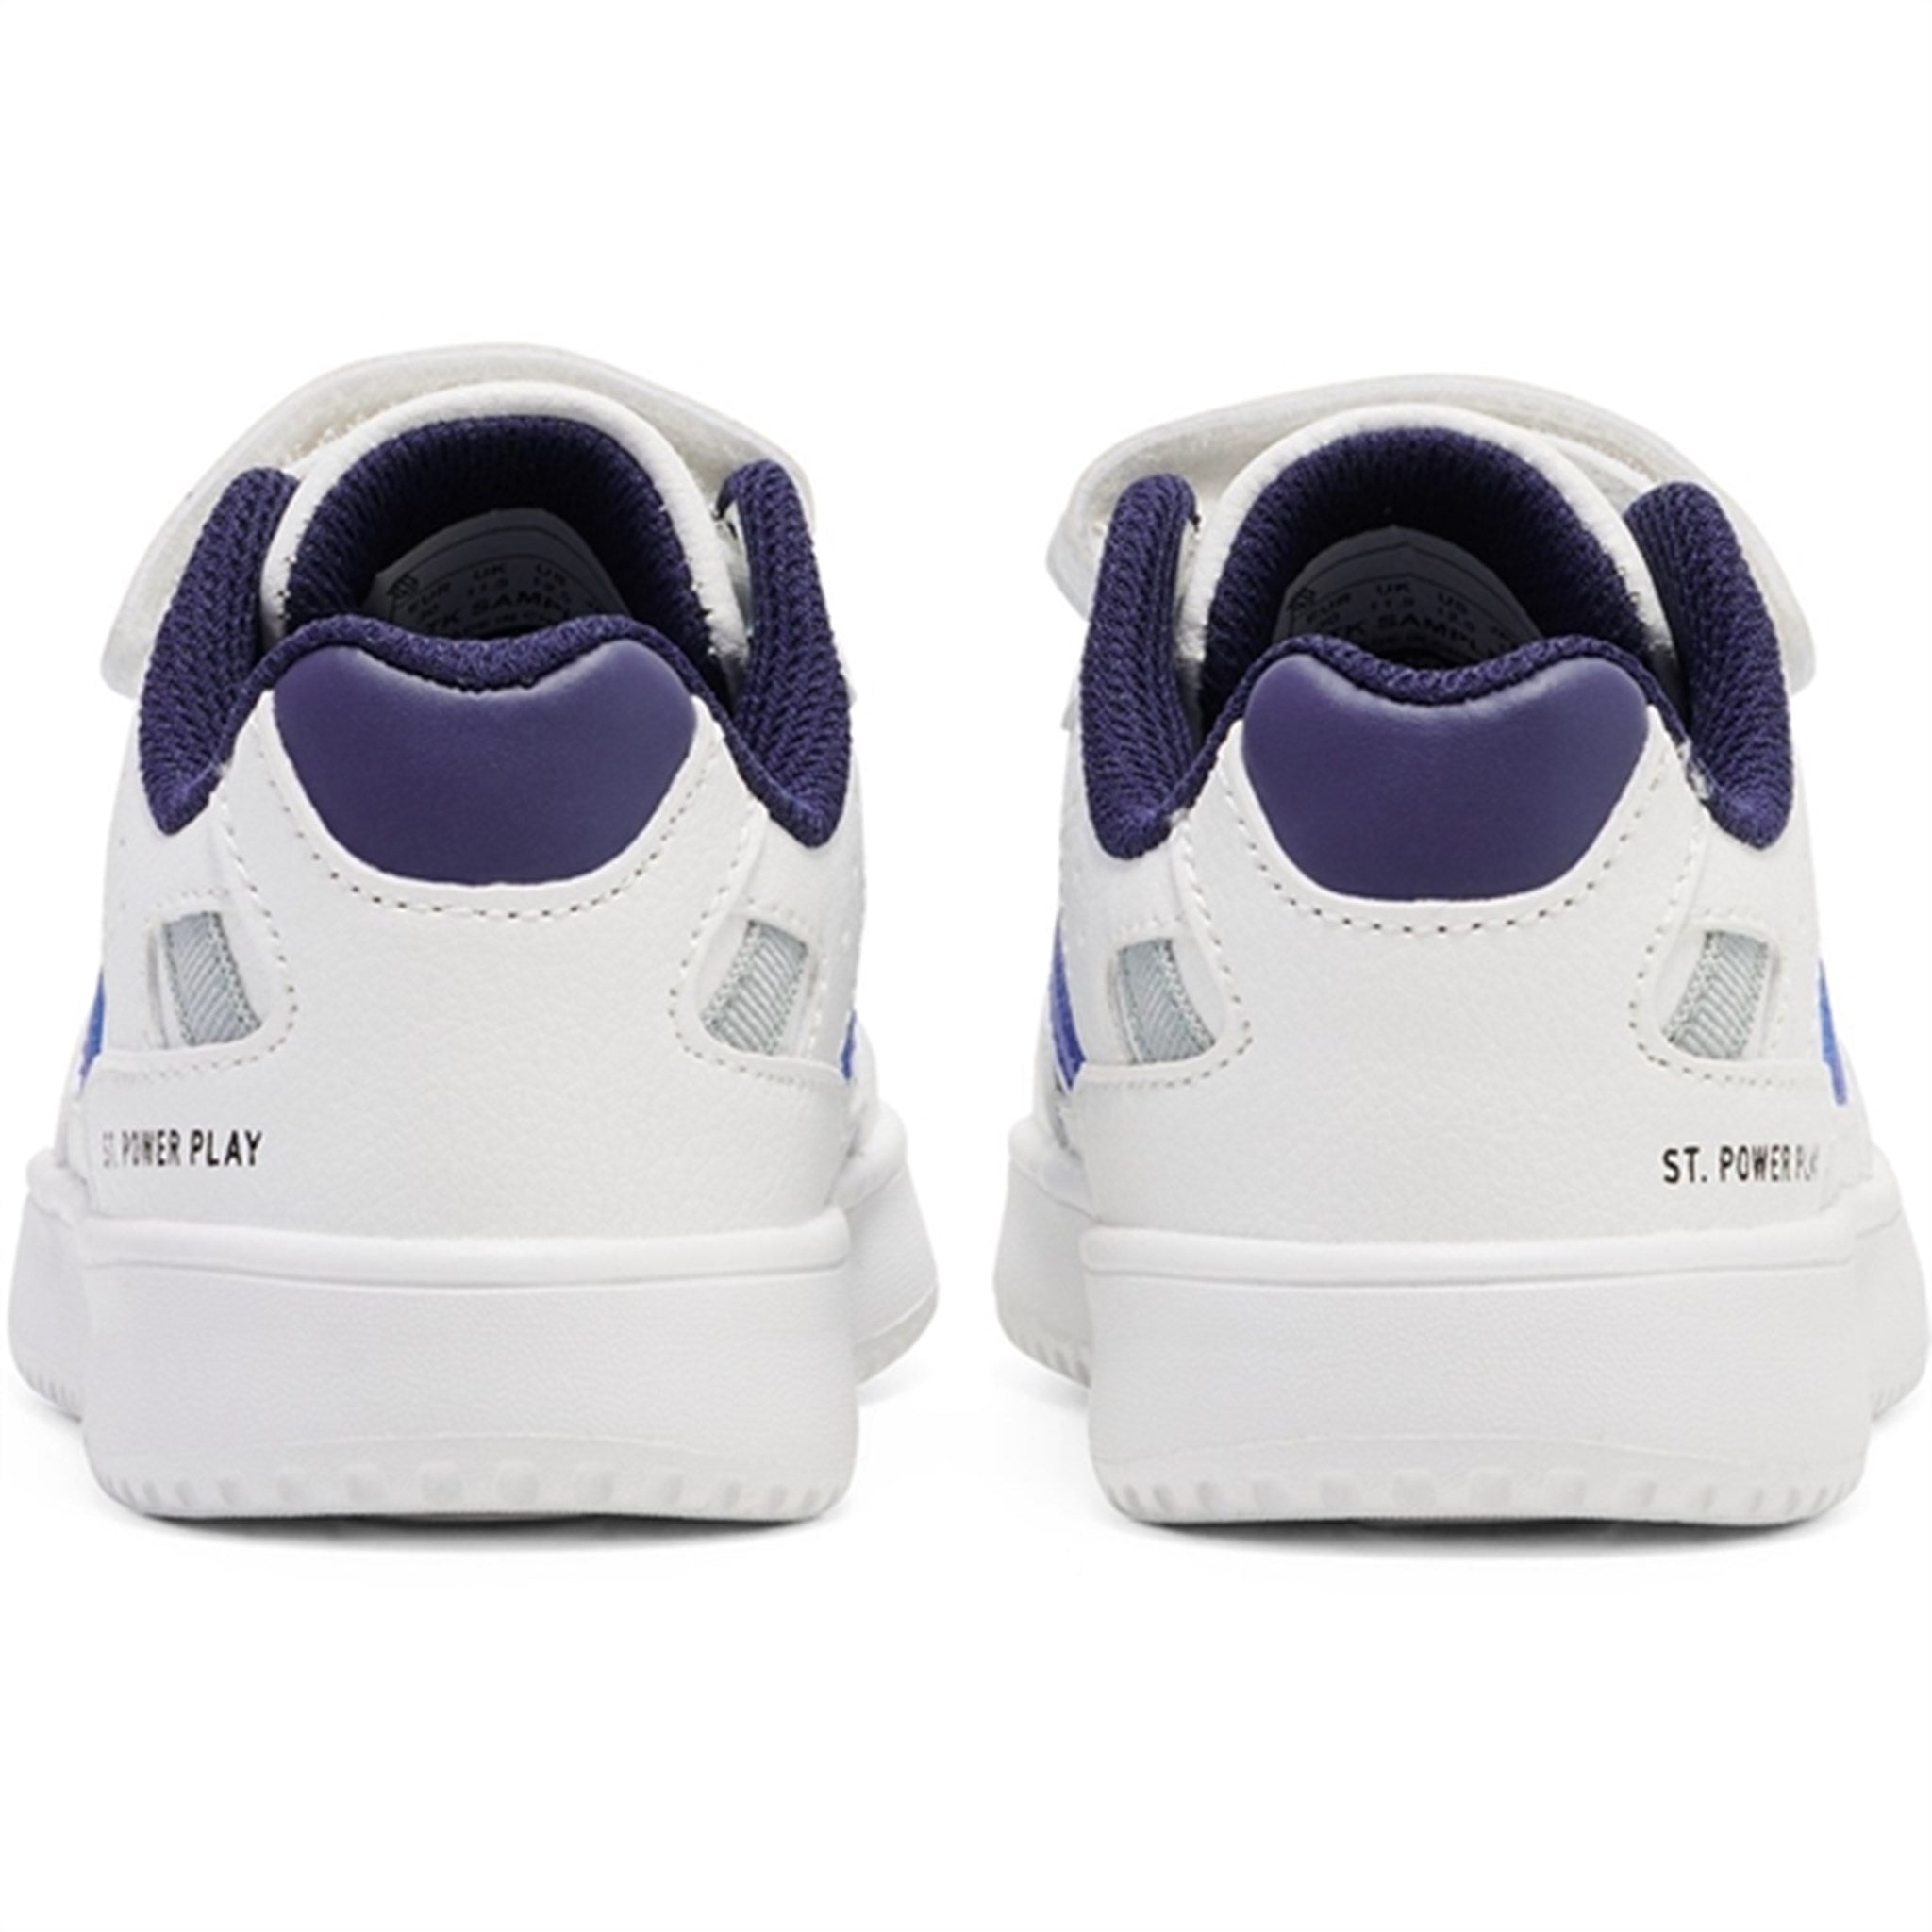 Hummel St. Power Play Jr Sneakers White/Black Iris 6